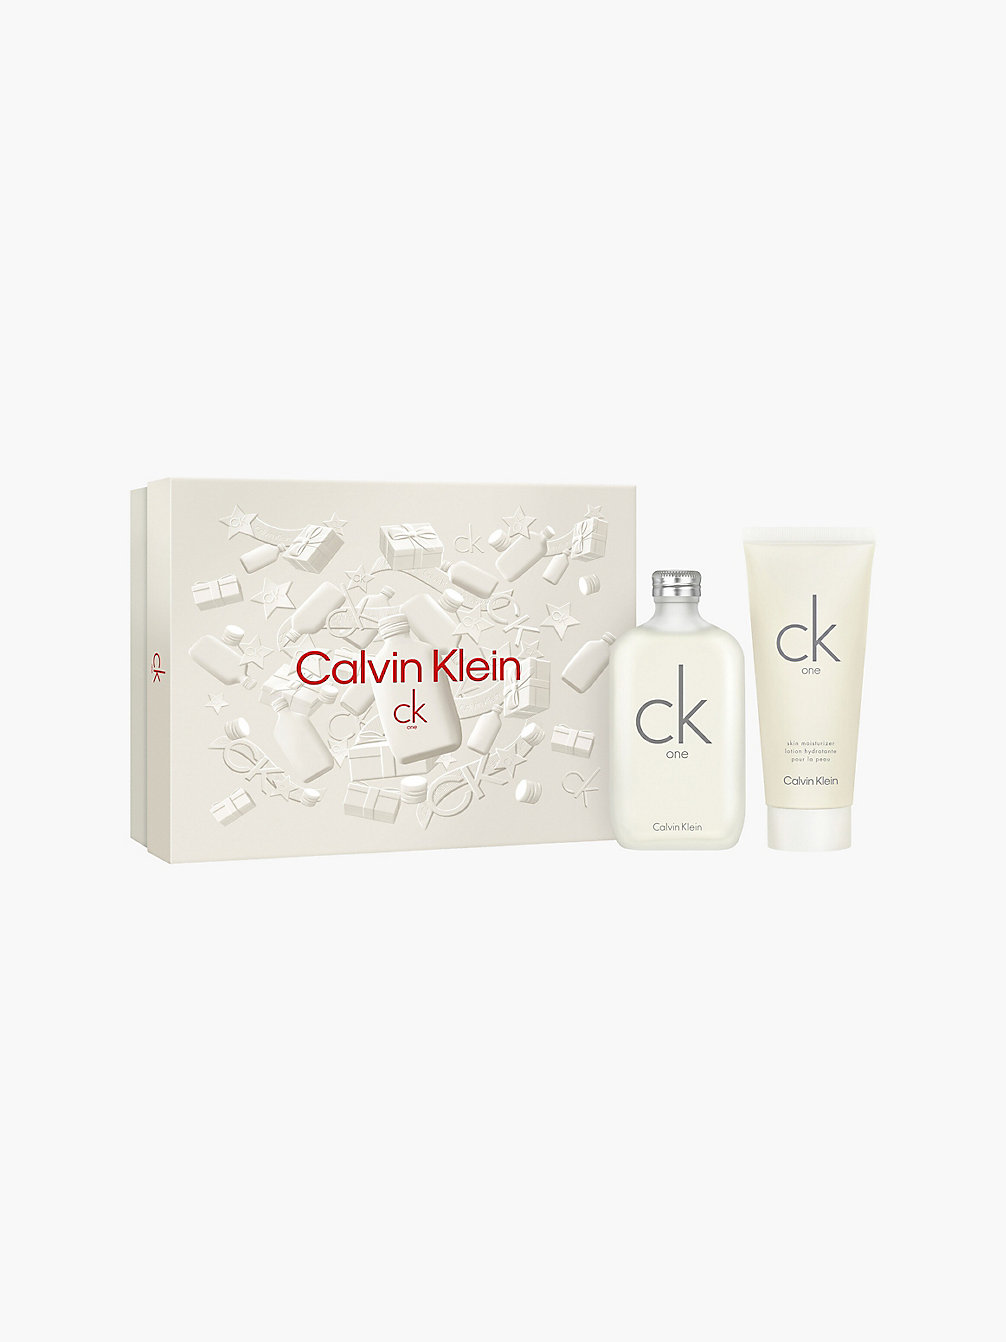 MULTI > CK One - Eau De Toilette в подарочном наборе > undefined unisex - Calvin Klein